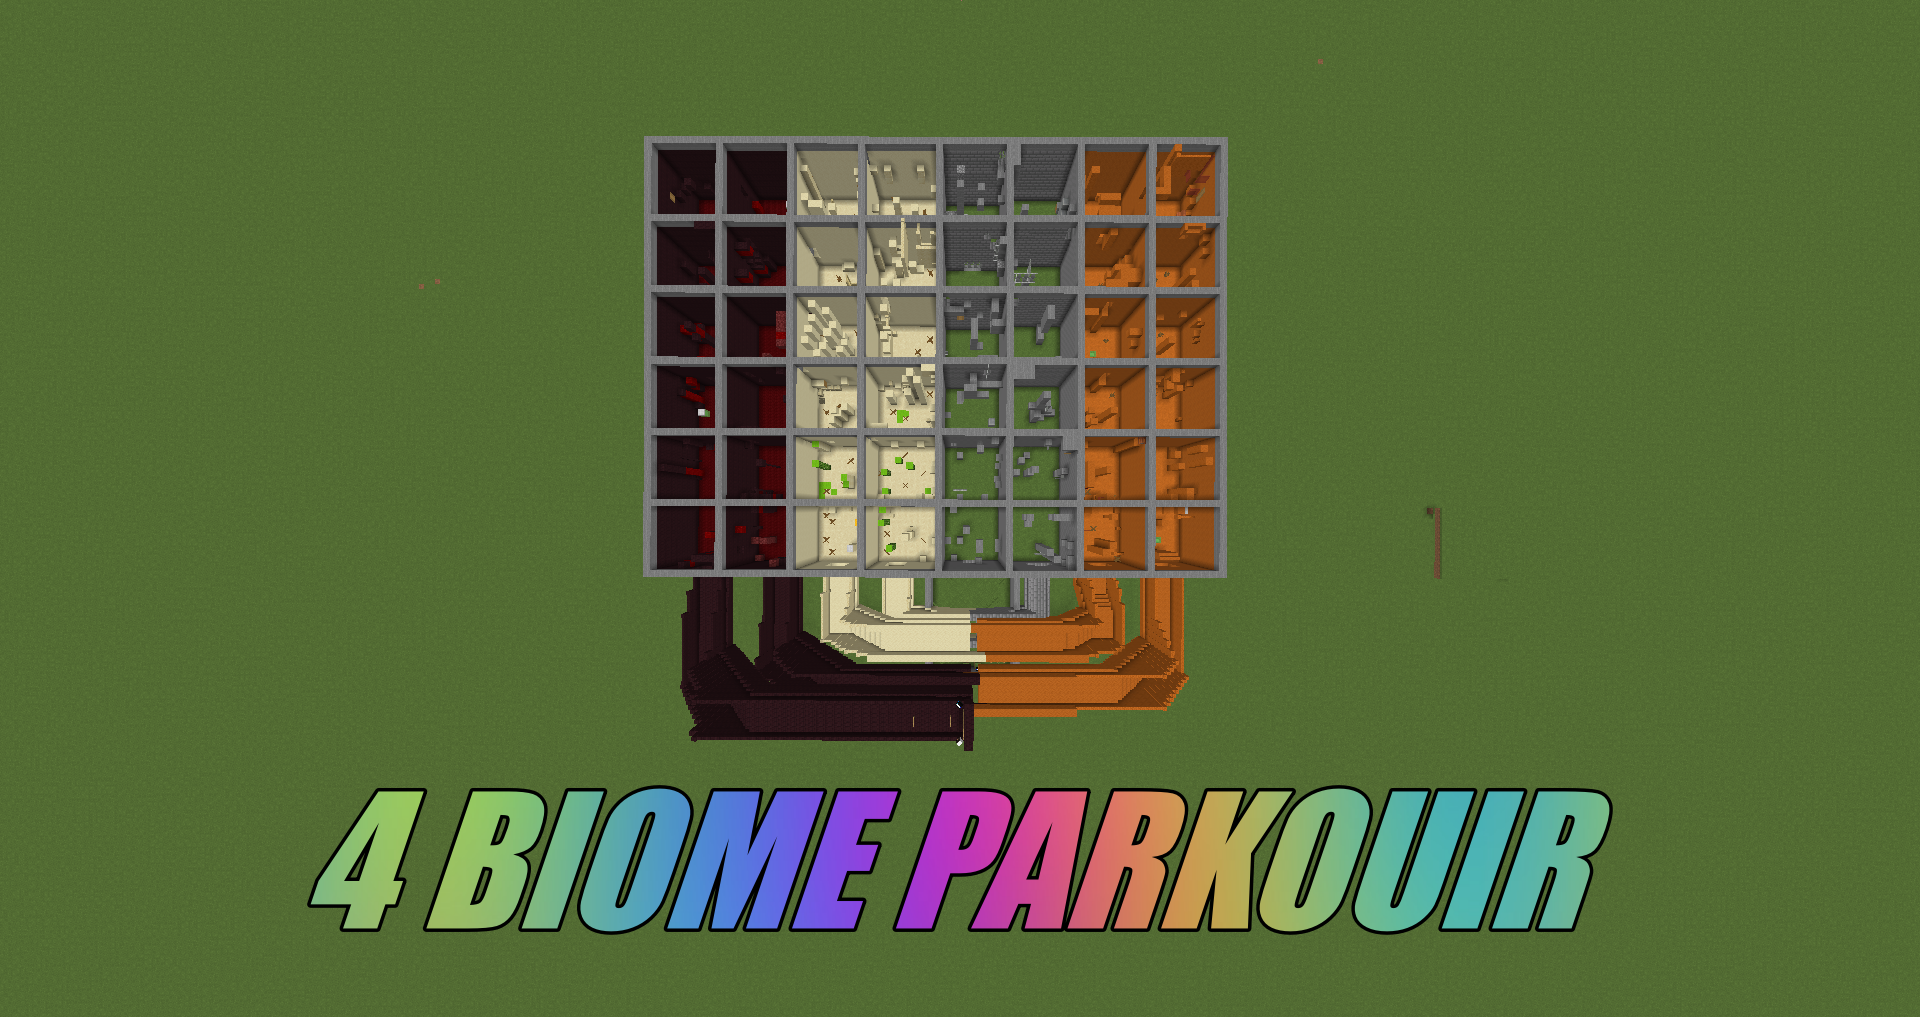 Tải về 4 Biome Parkour cho Minecraft 1.16.5